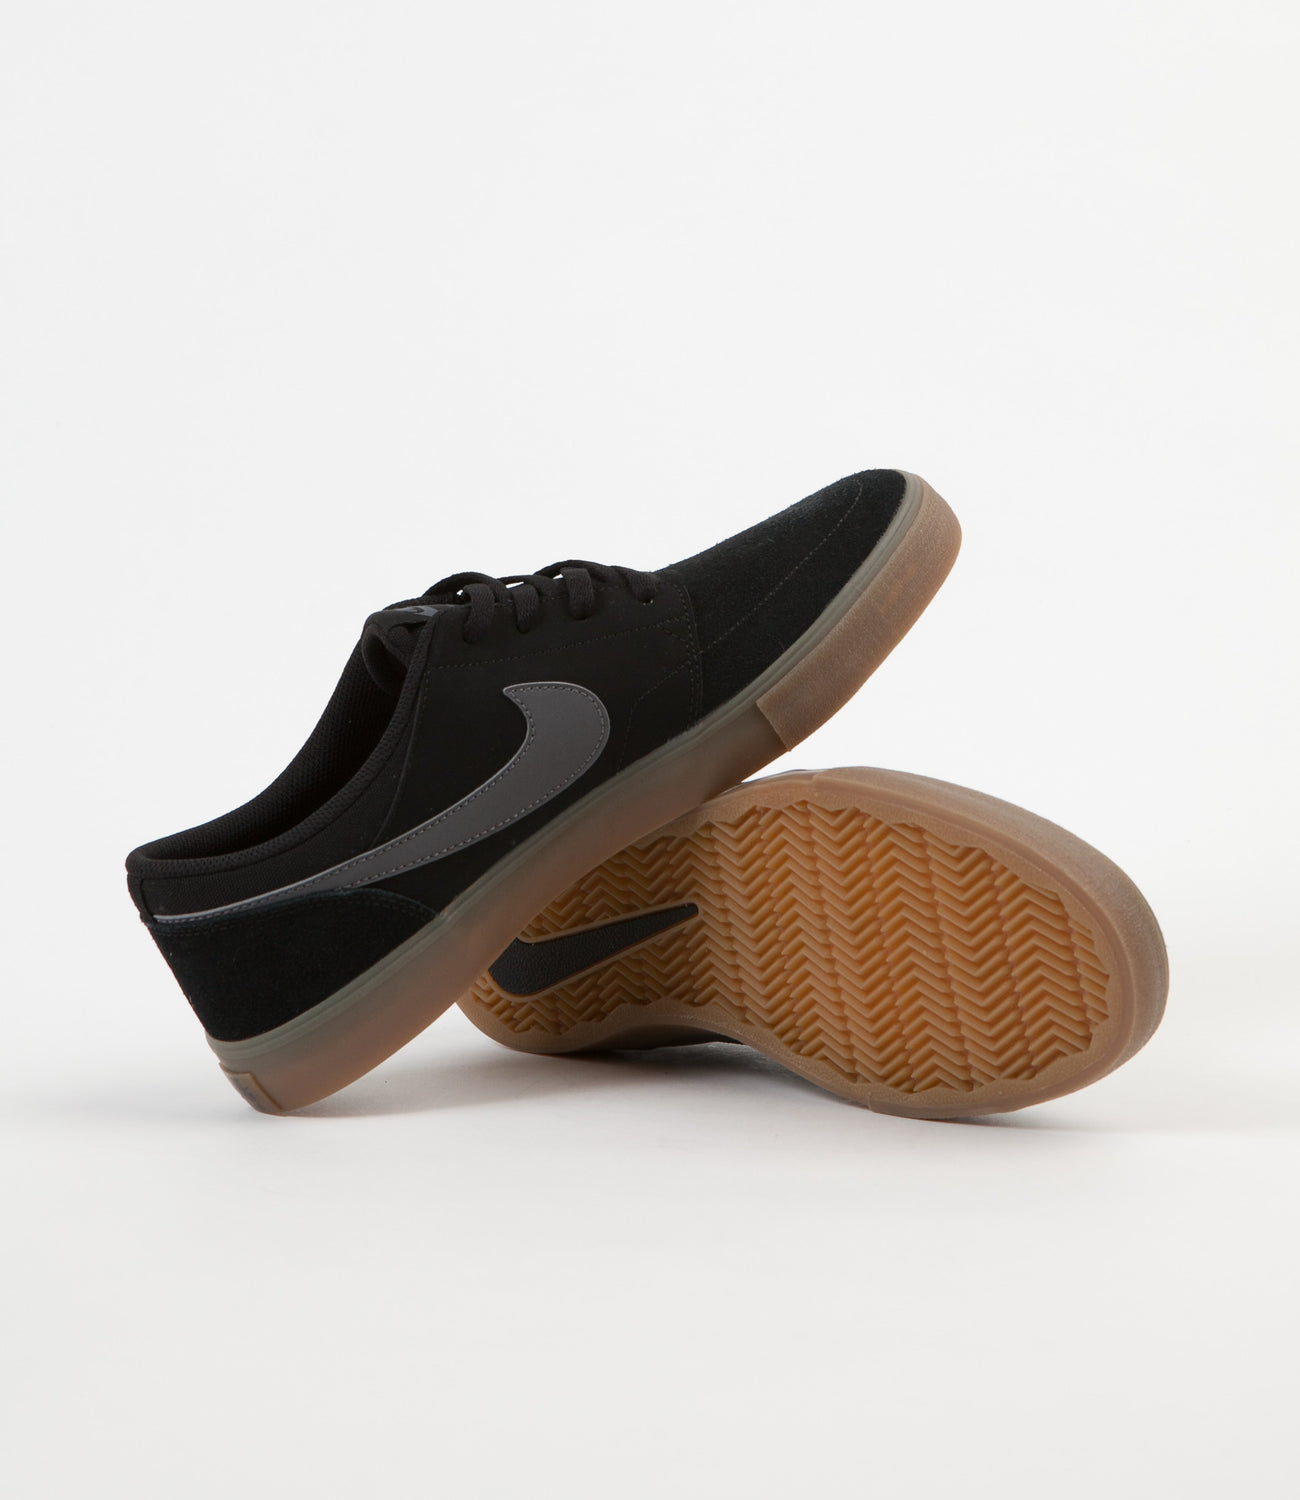 en voz alta erosión Vueltas y vueltas Nike SB Solarsoft Portmore II Shoes - Black / Dark Grey - Gum Light Br |  Flatspot